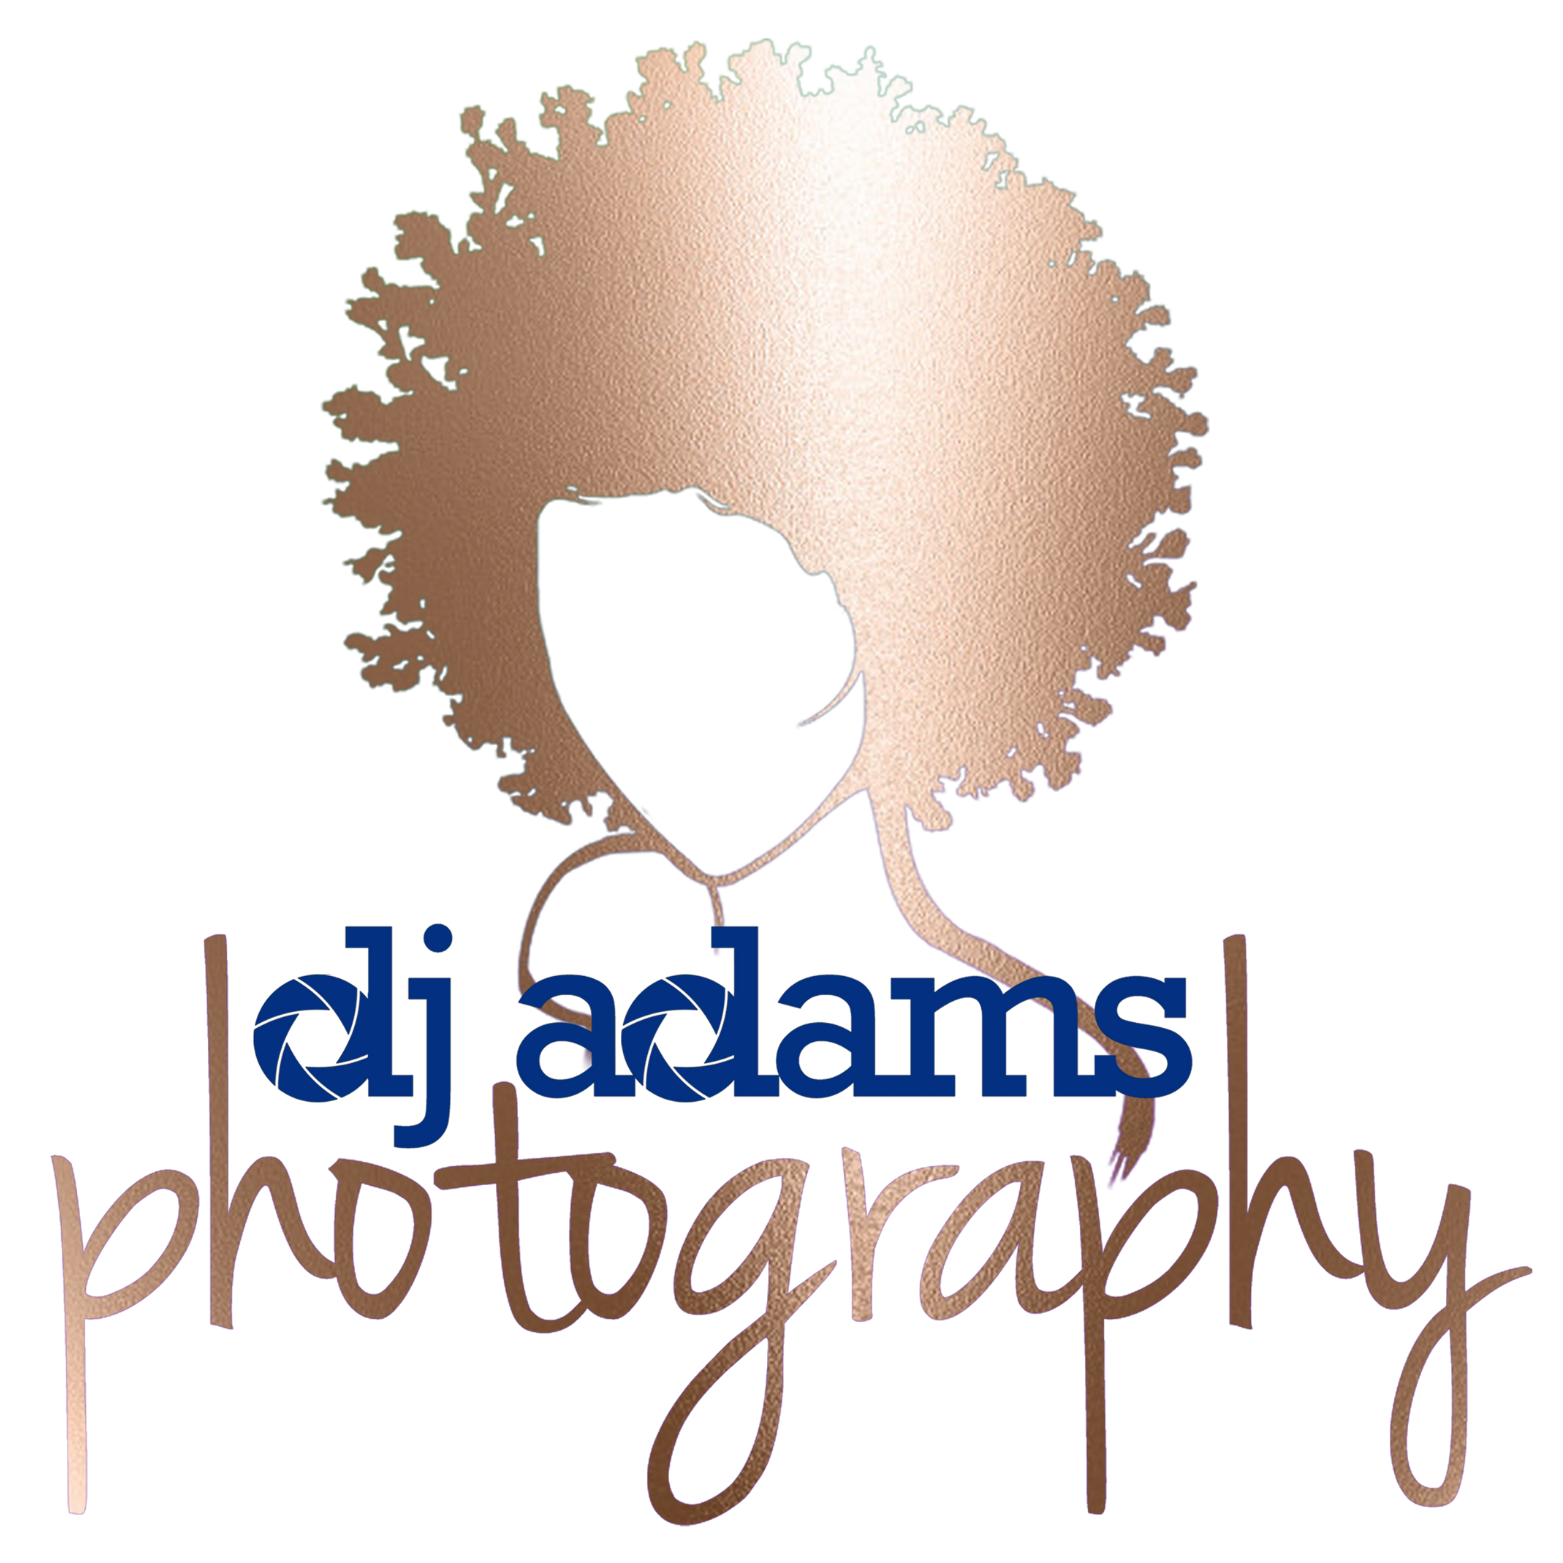 DJ Adams Photography